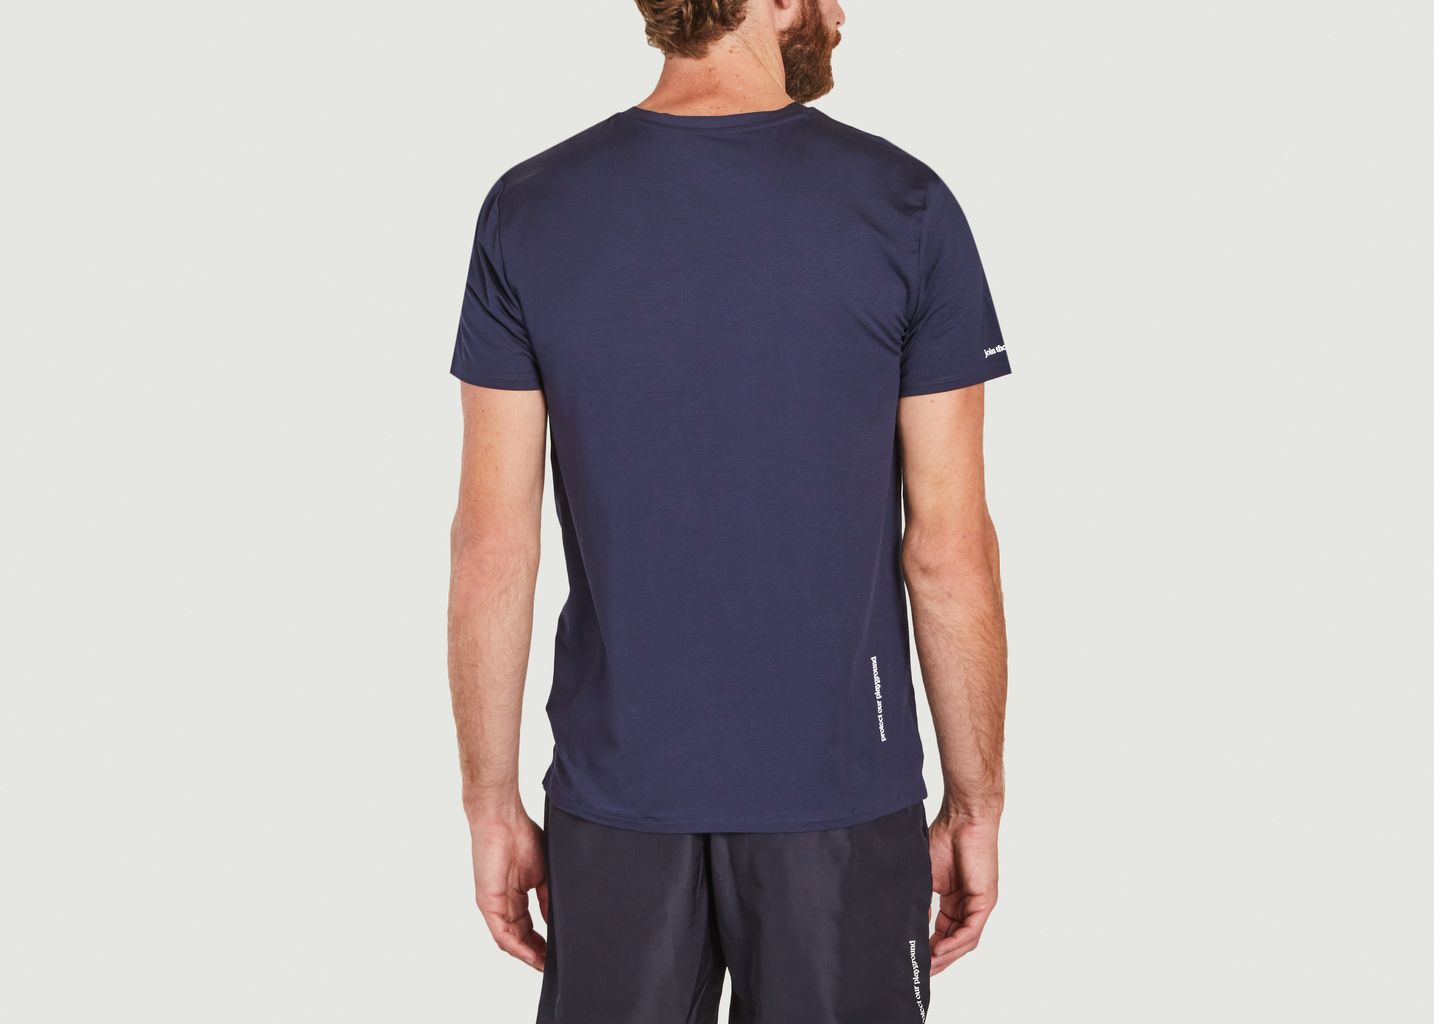 Iconic Sport's T-shirt - Circle Sportswear